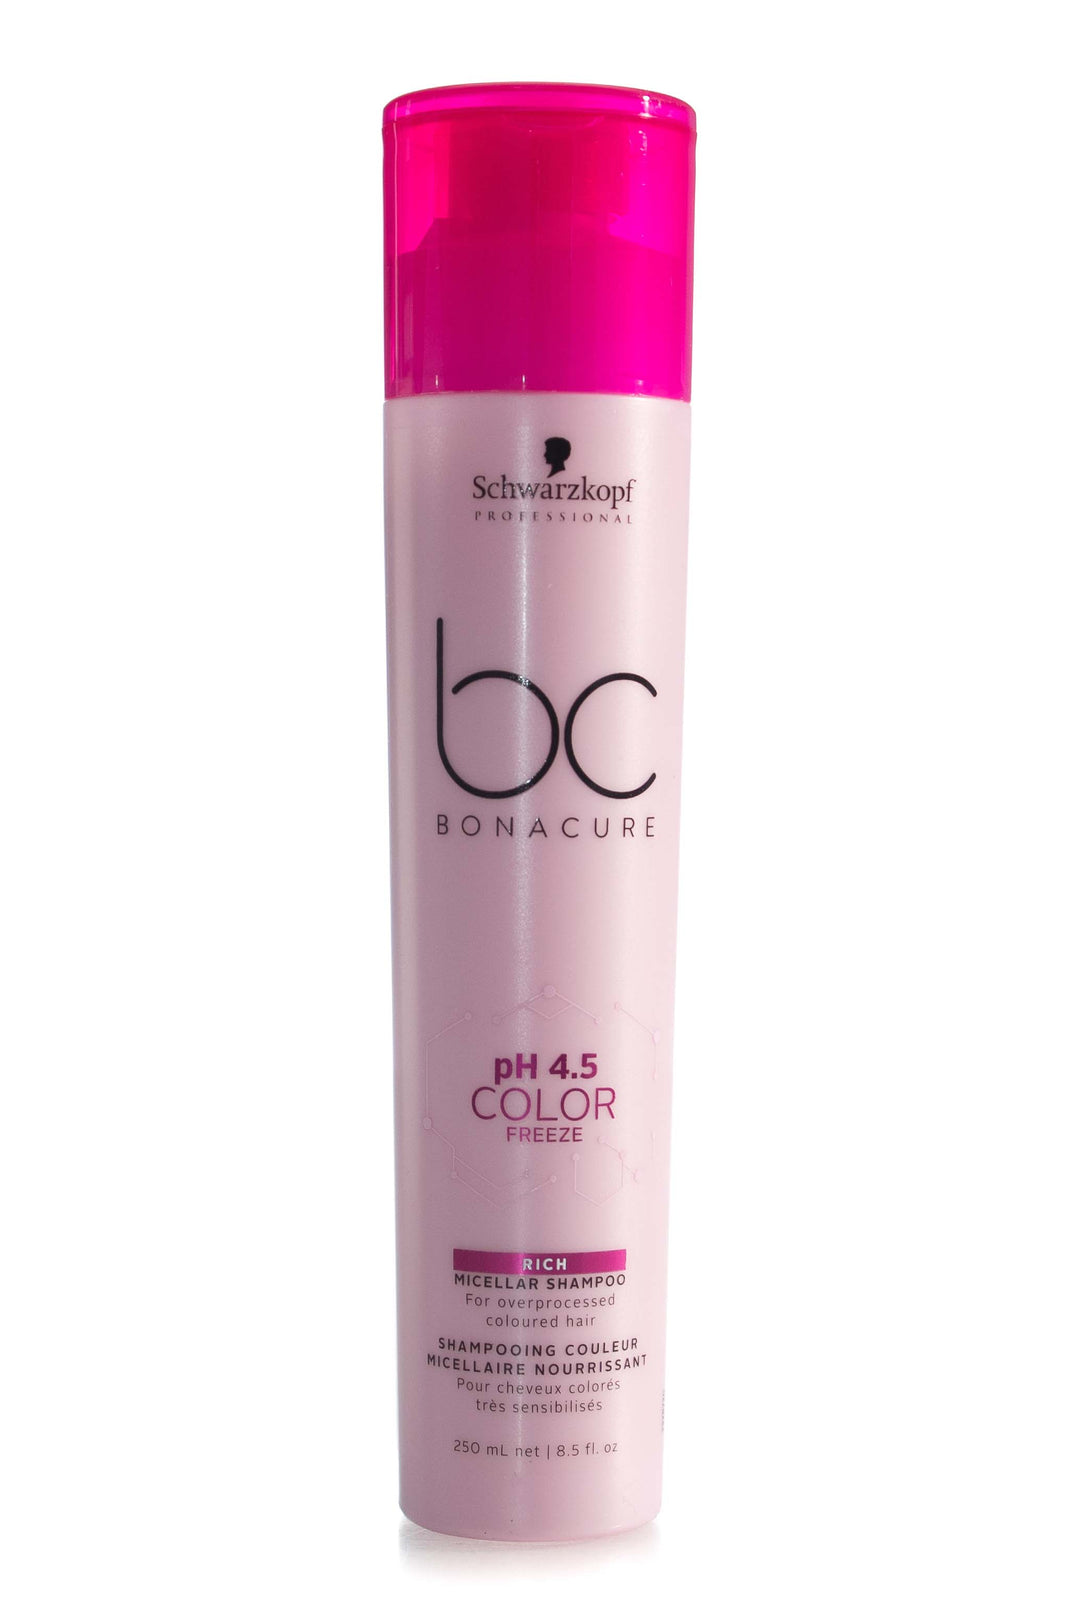 schwarzkopf-bc-bonacure-ph-4.5-color-freeze-rich-micellar-shampoo-250ml